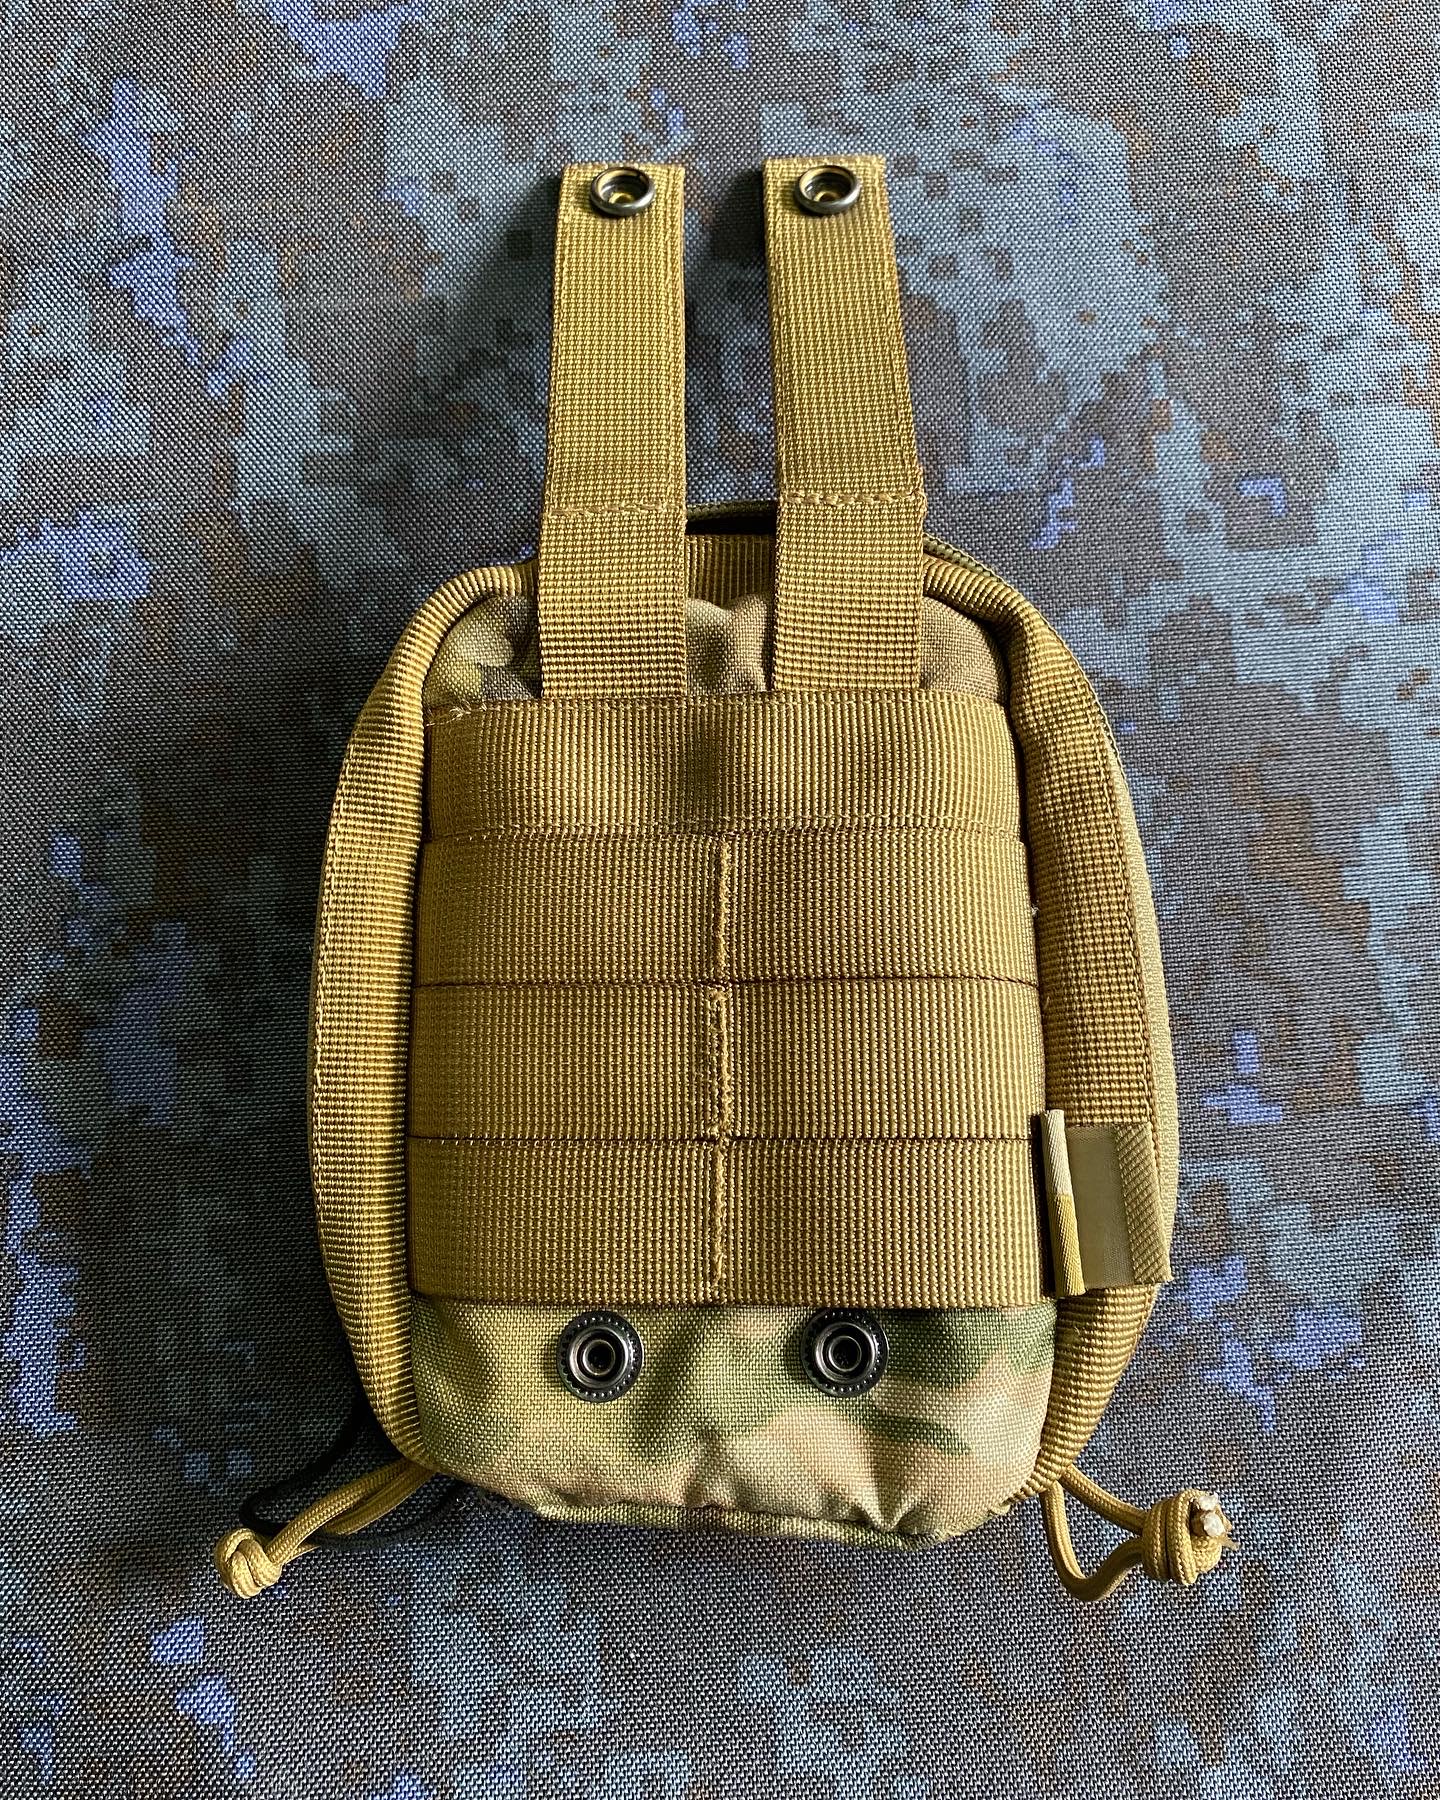 Tactical range bag tactical pouch